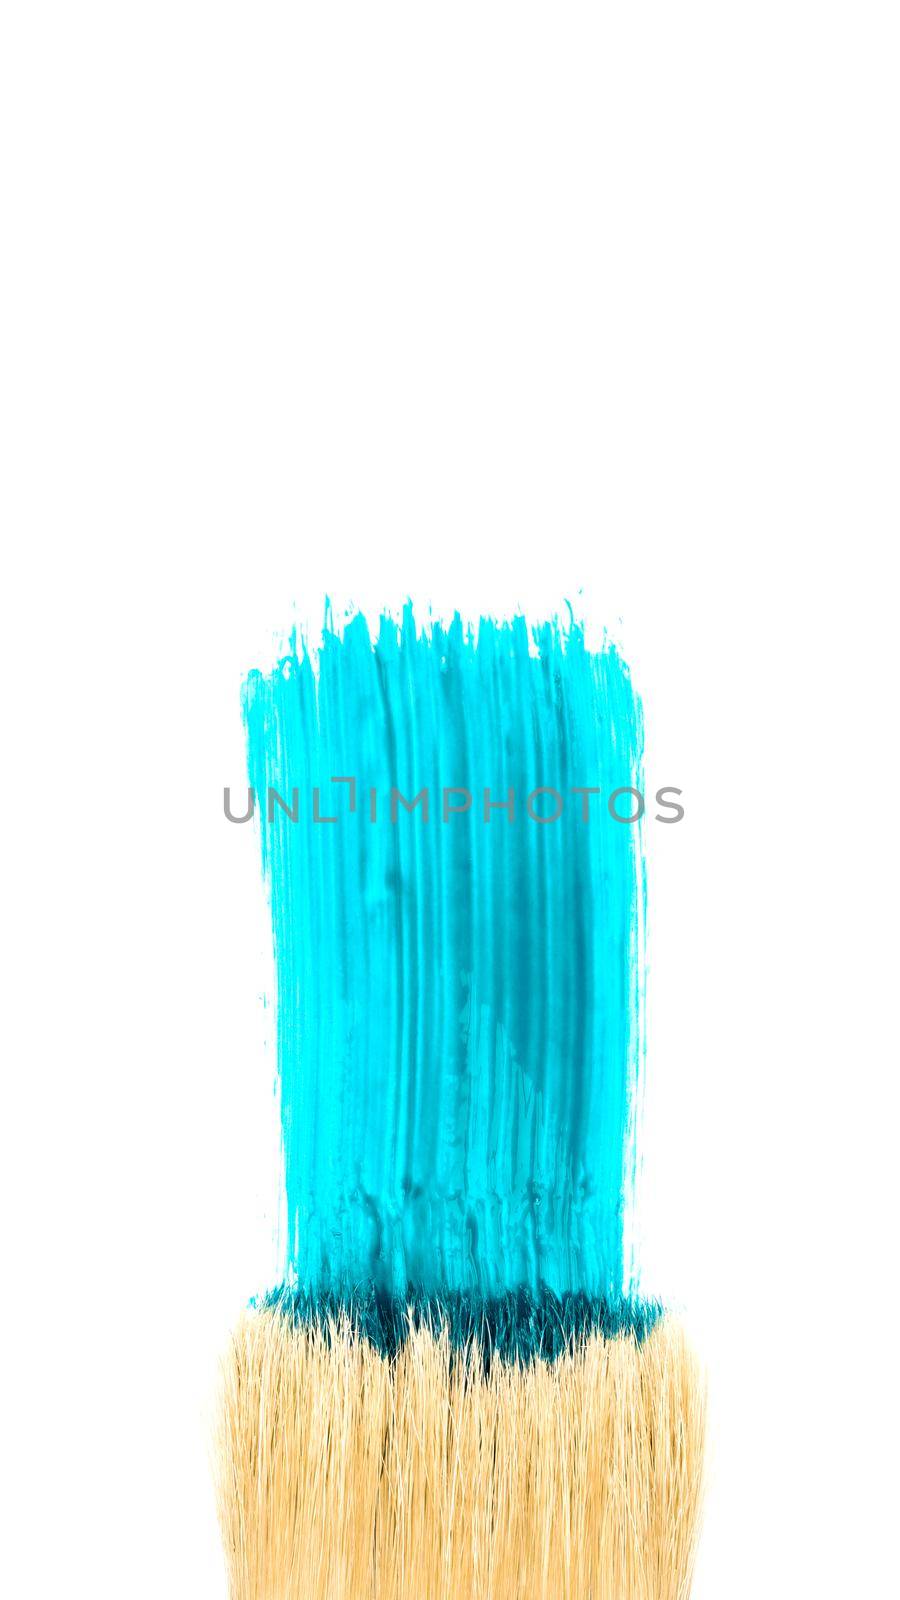 Paint Brush Stroke Texture Blue Watercolor Spot Blotch Isolated.